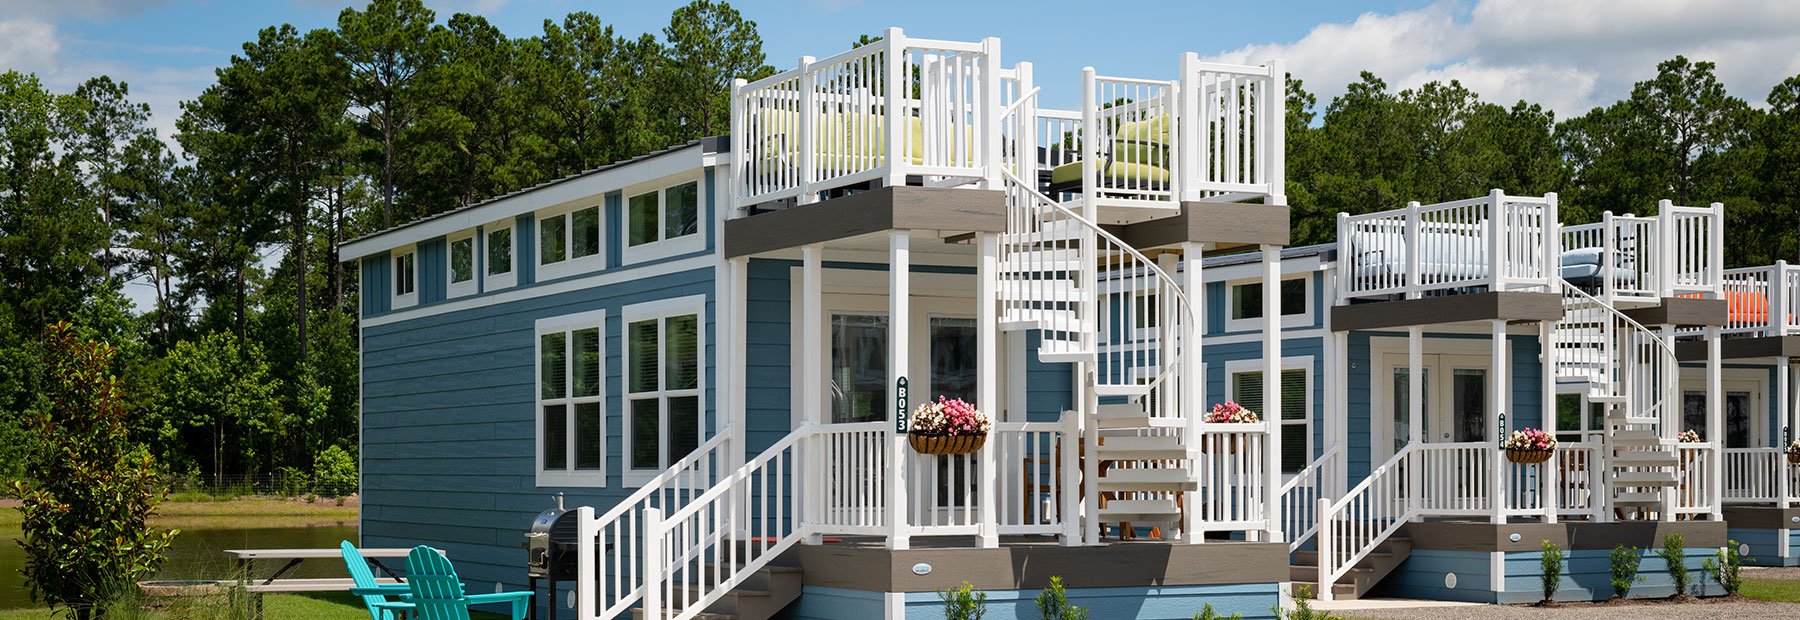 Carolina Pines RV Resort Ways to Stay